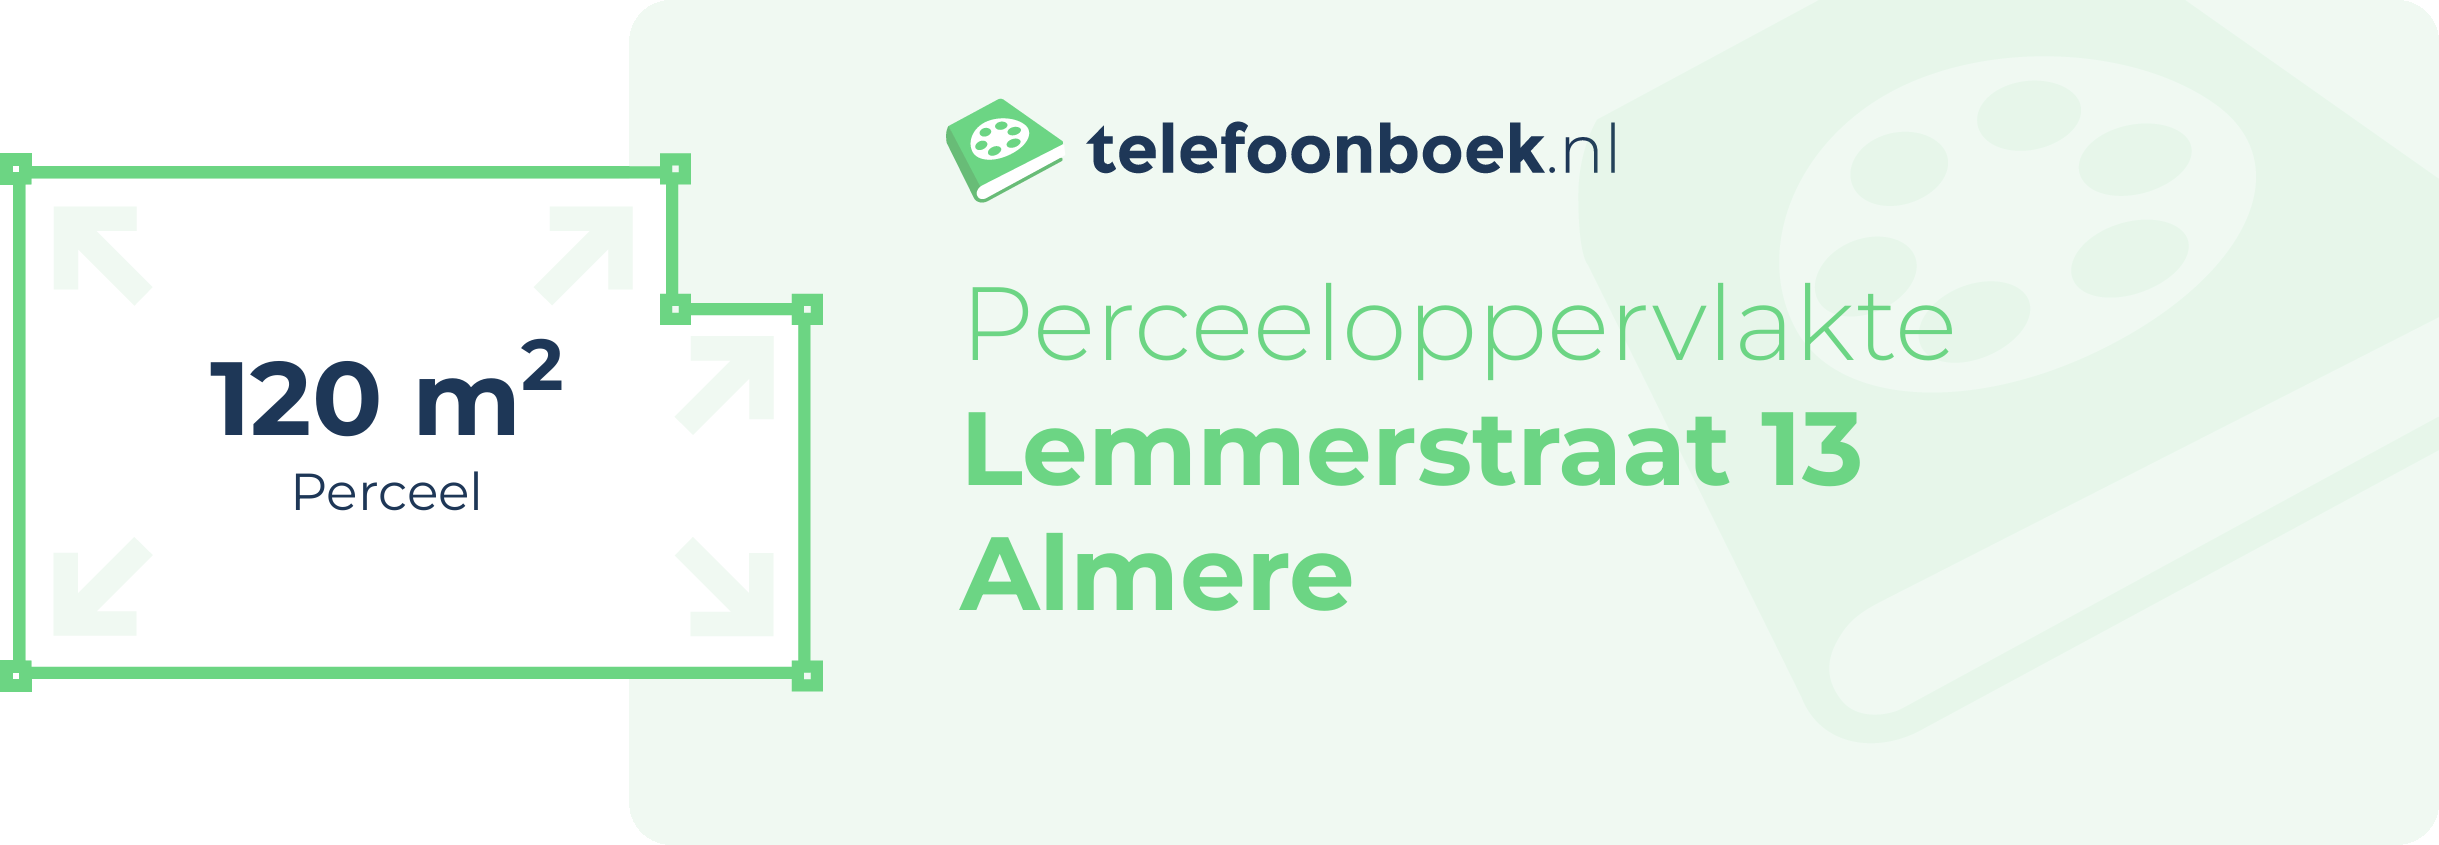 Perceeloppervlakte Lemmerstraat 13 Almere